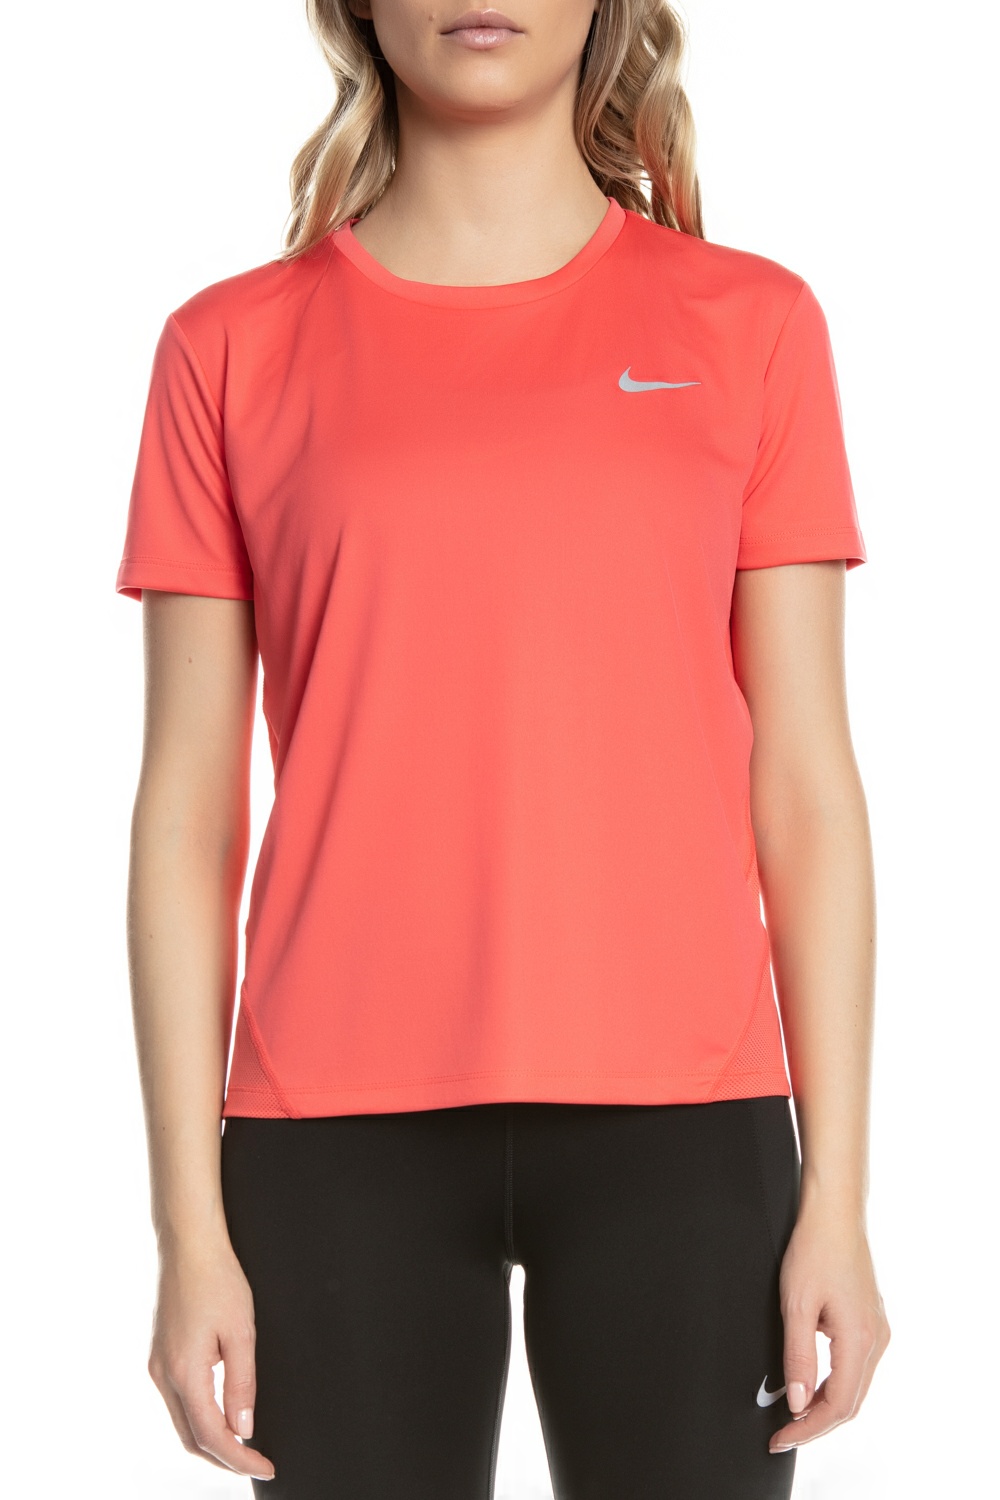 NIKE - Γυναικεία κοντομάνικη μπλούζα Nike Dry Miler πορτοκαλί Γυναικεία/Ρούχα/Αθλητικά/T-shirt-Τοπ